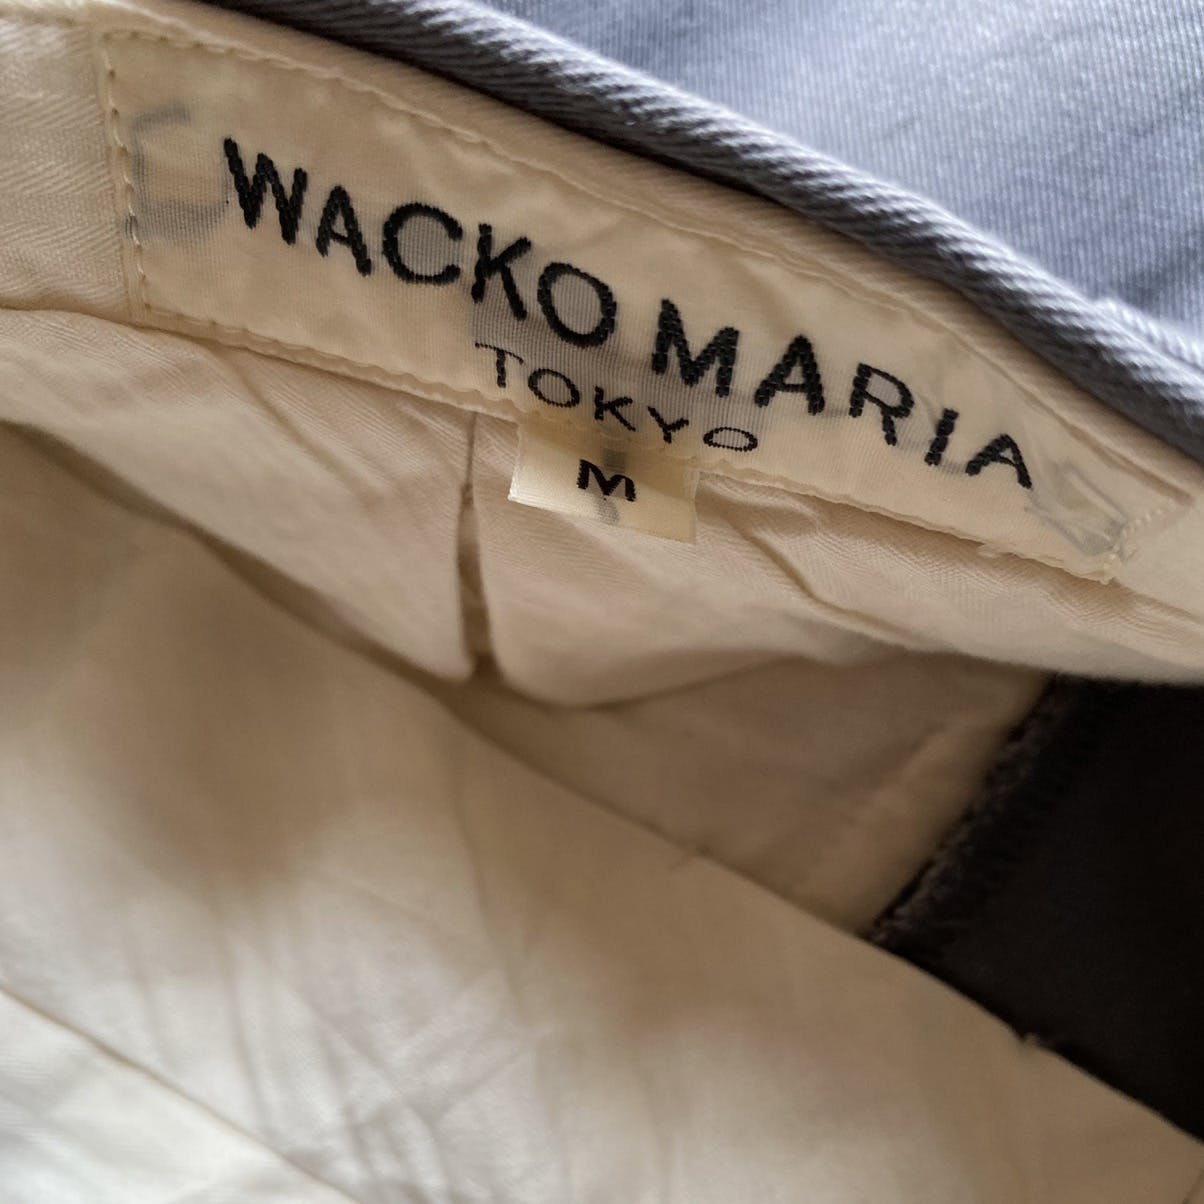 Wacko Maria Slim Fit Chino Pants - 4